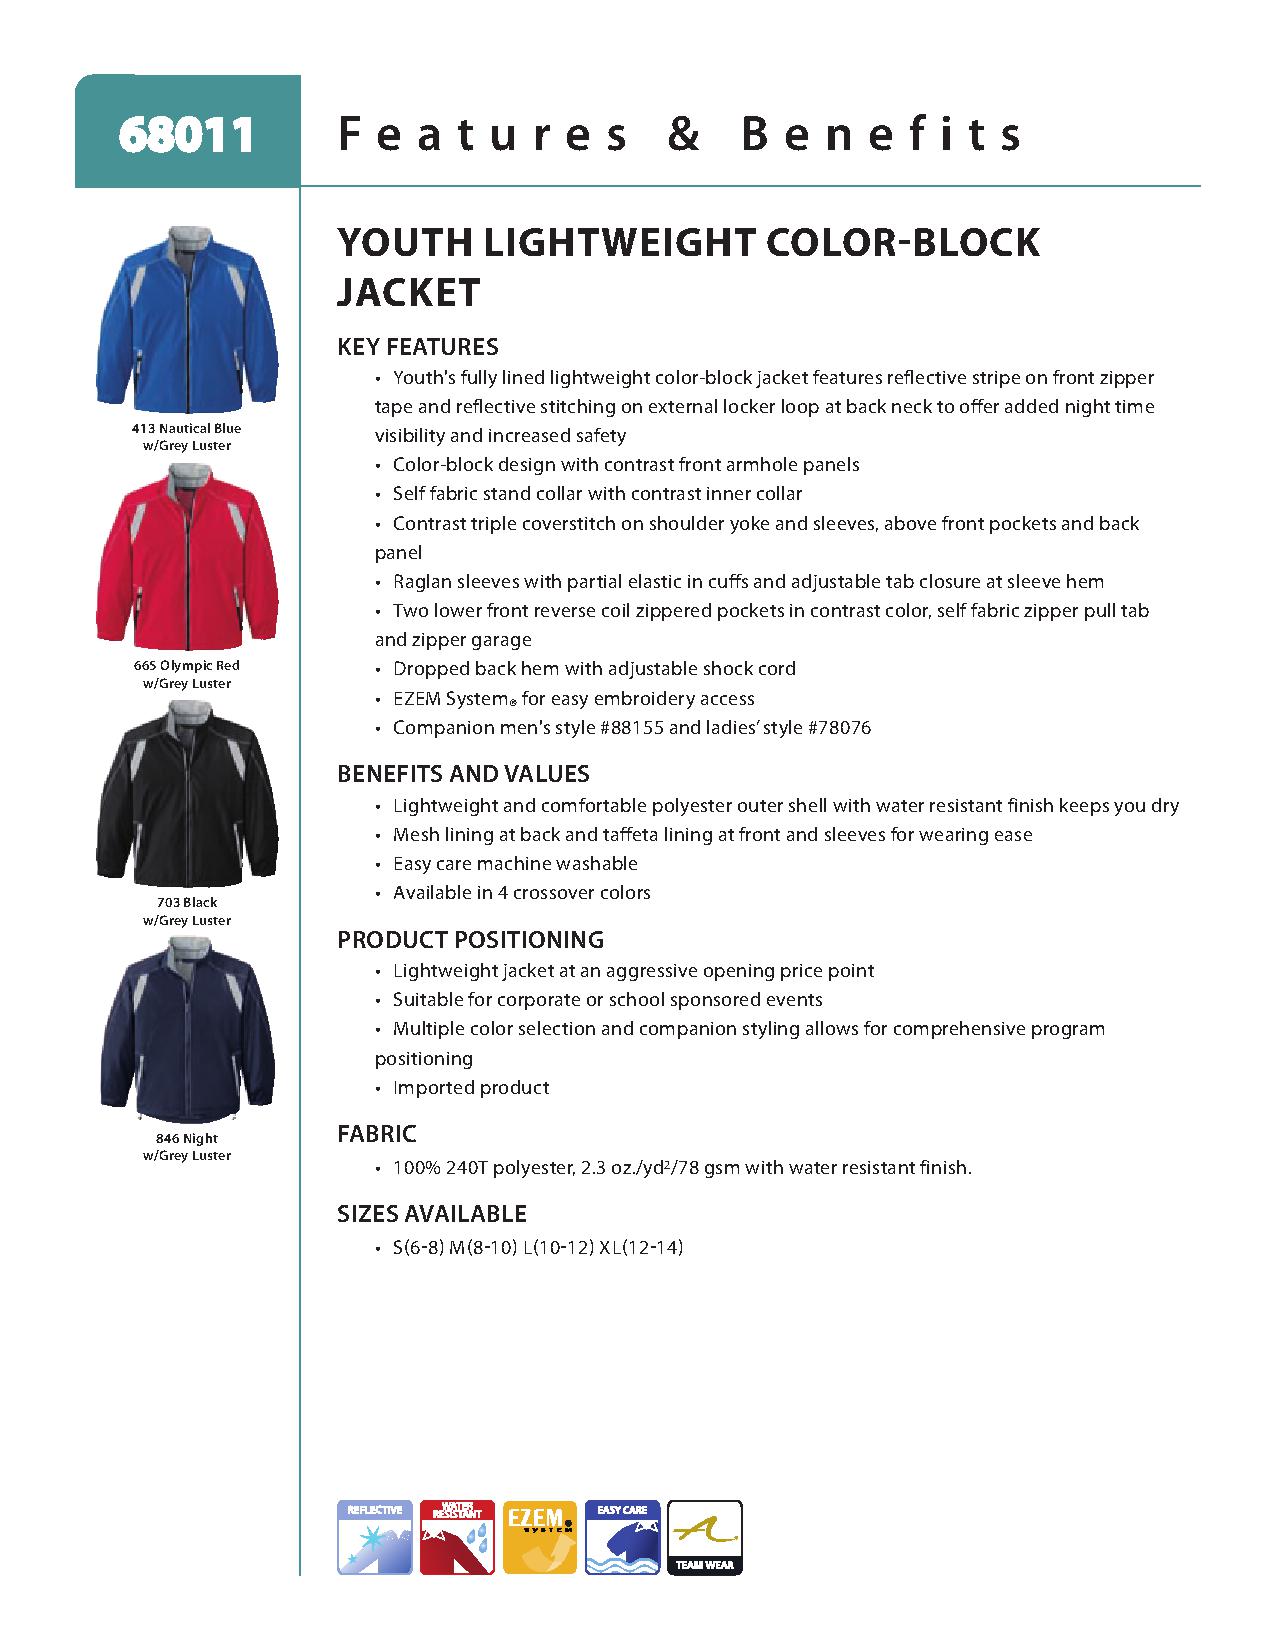 Ash City Lightweight 68011 - Youth Lightweight Color-Block Jacket